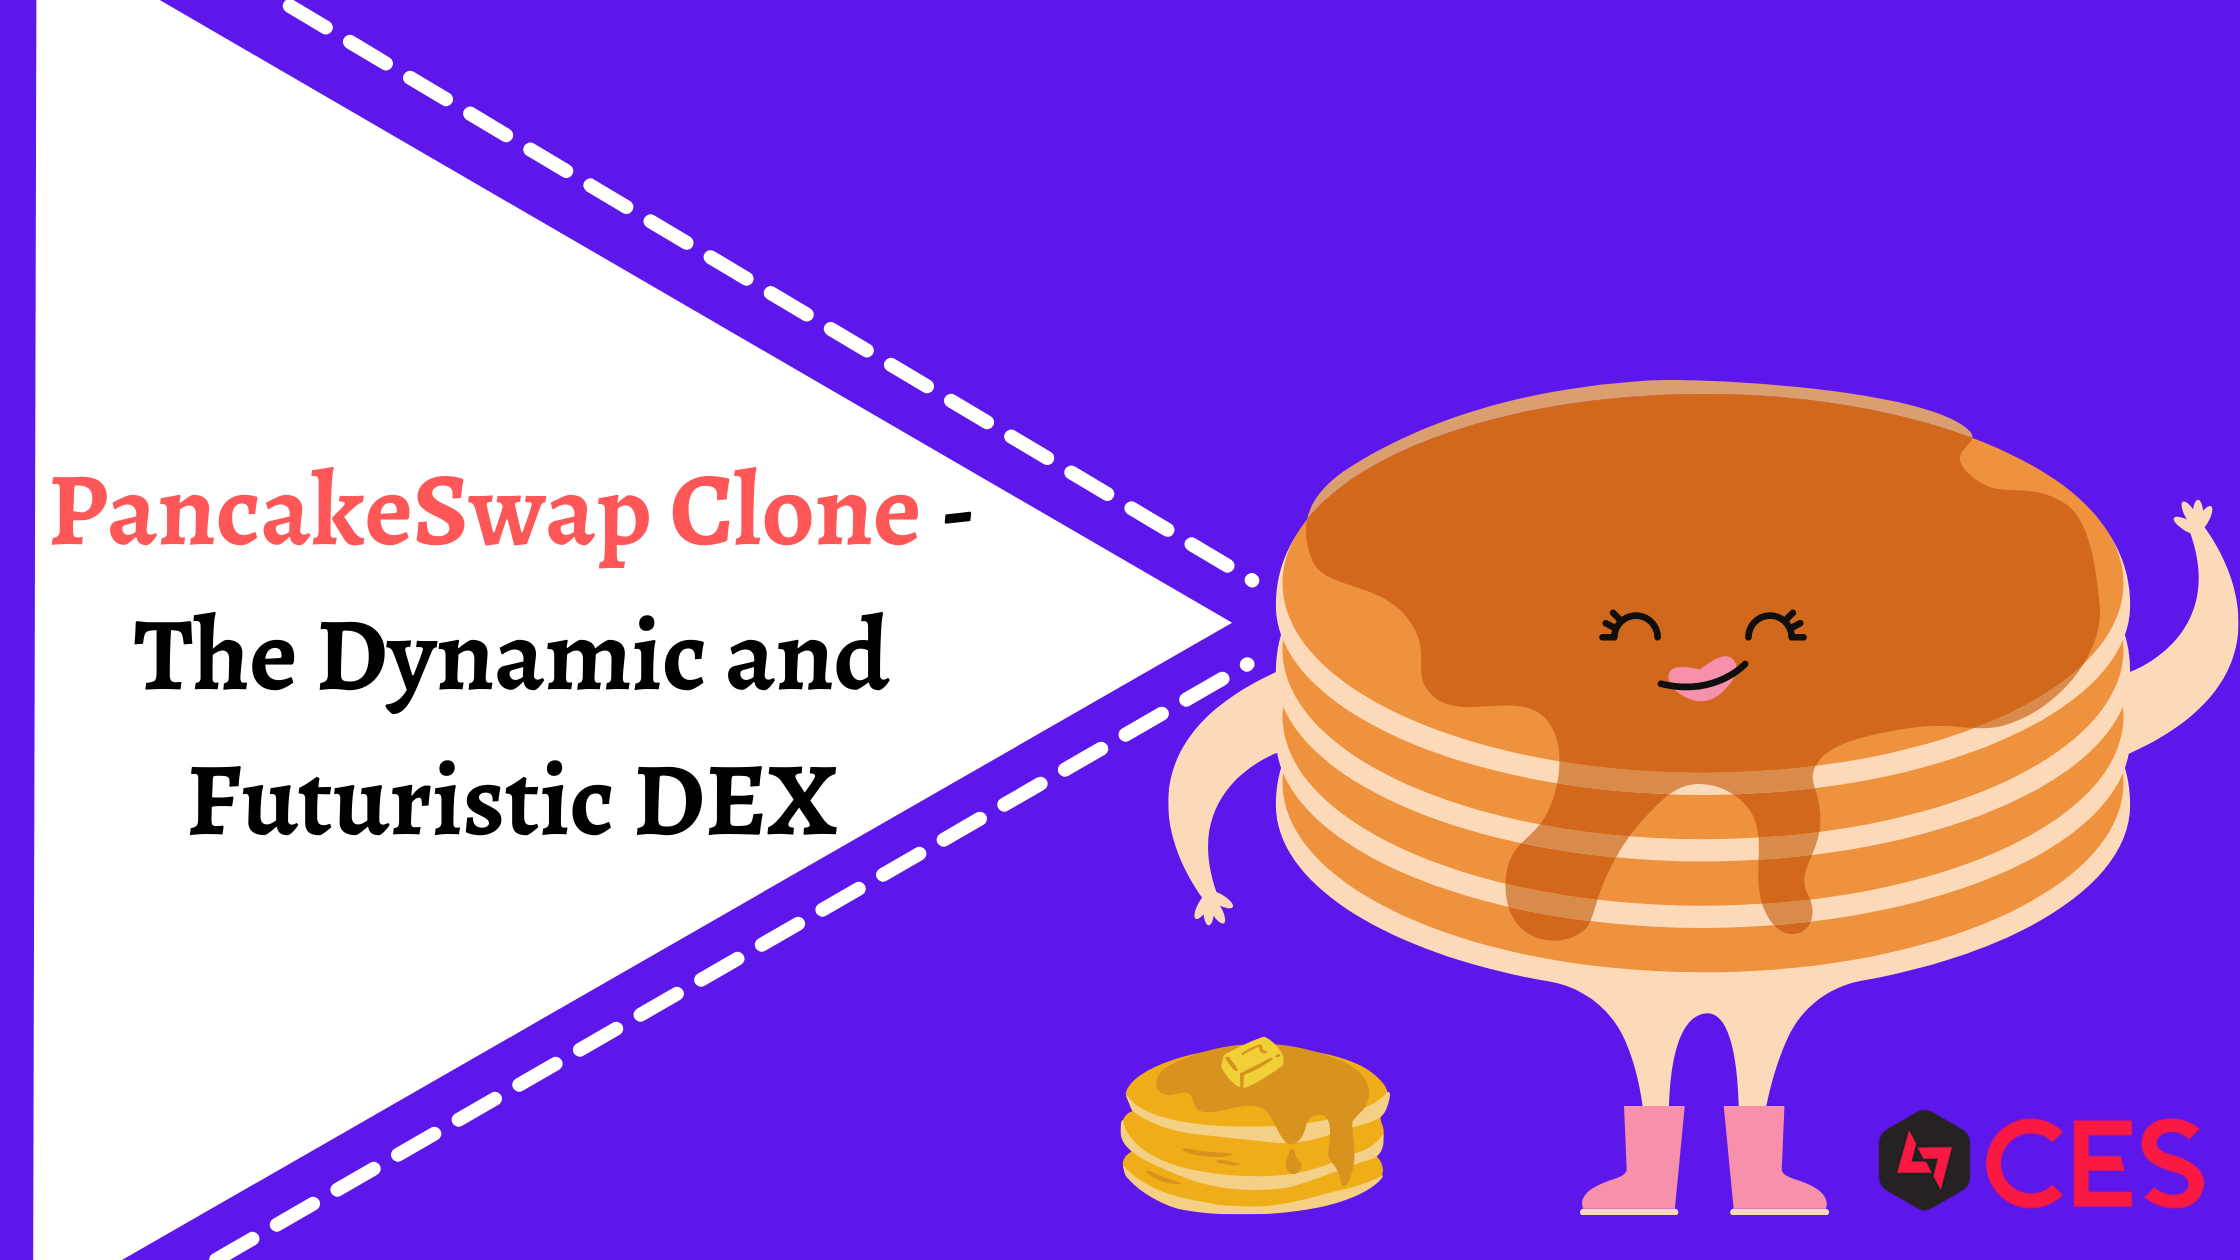 PancakeSwap Clone - The Dynamic and Futuristic DEX